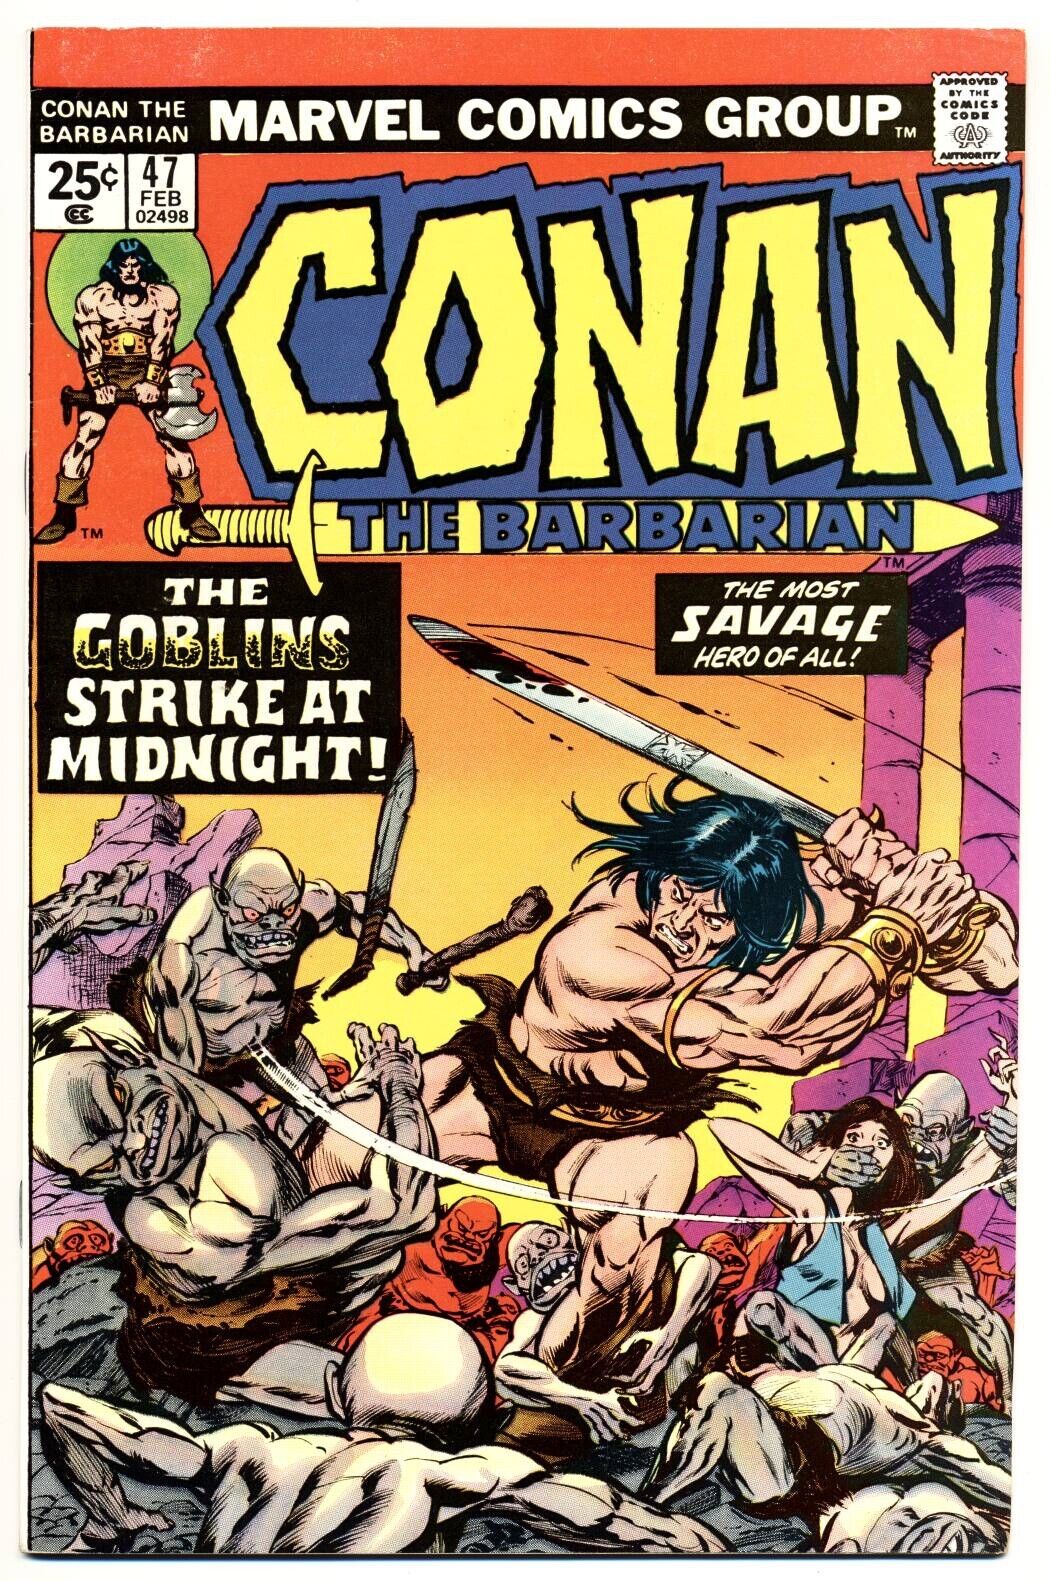 CONAN THE BARBARIAN #47 F/VF, Subscription Insert Variant, Marvel Comics 1975